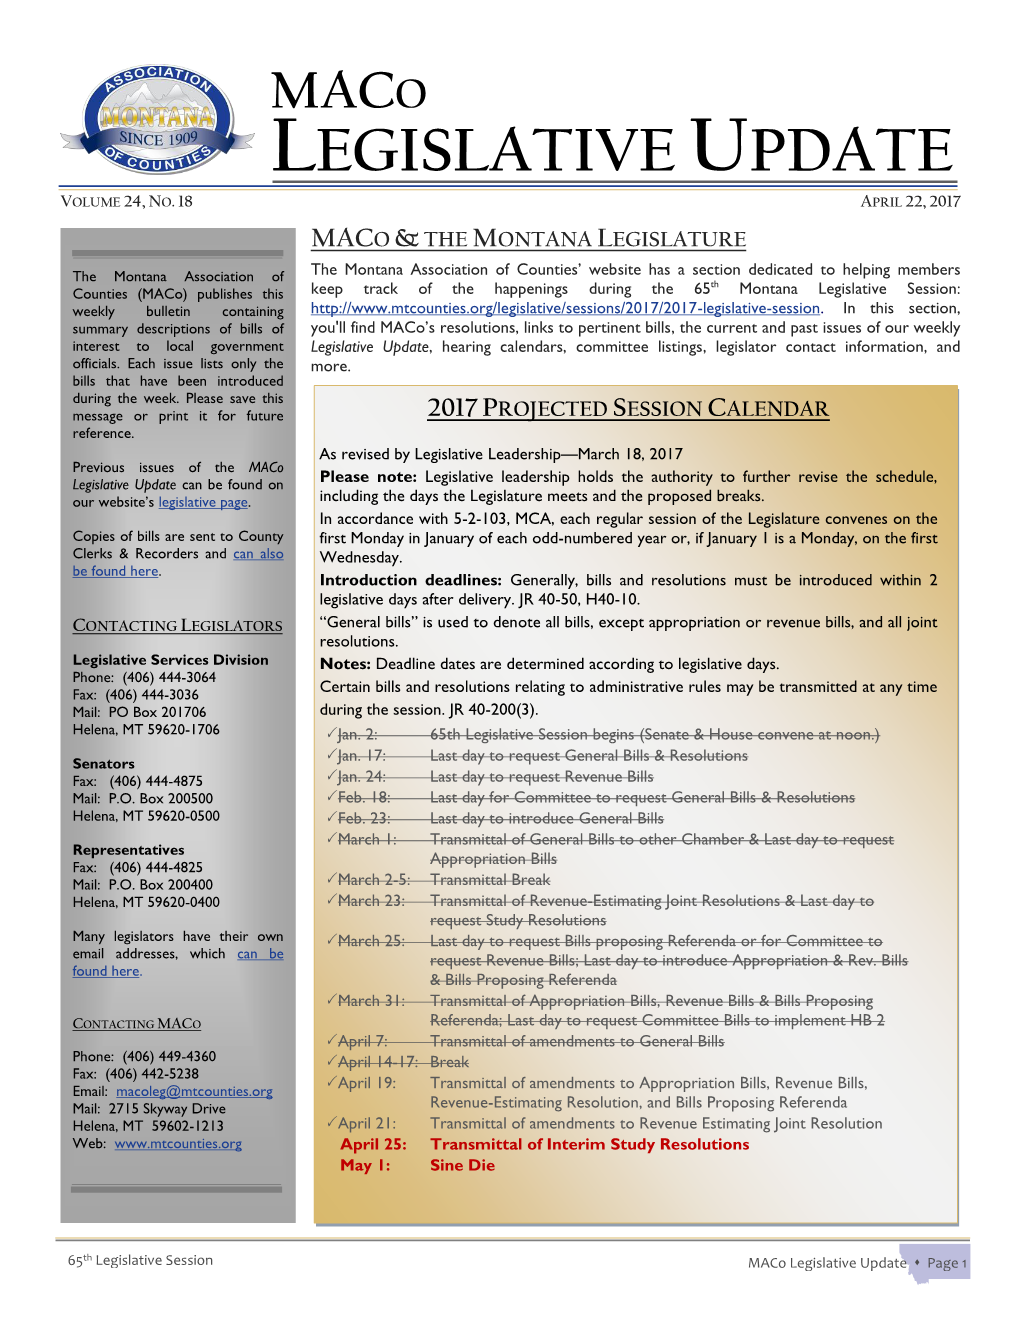 Maco Legislative Update Volume 24, No